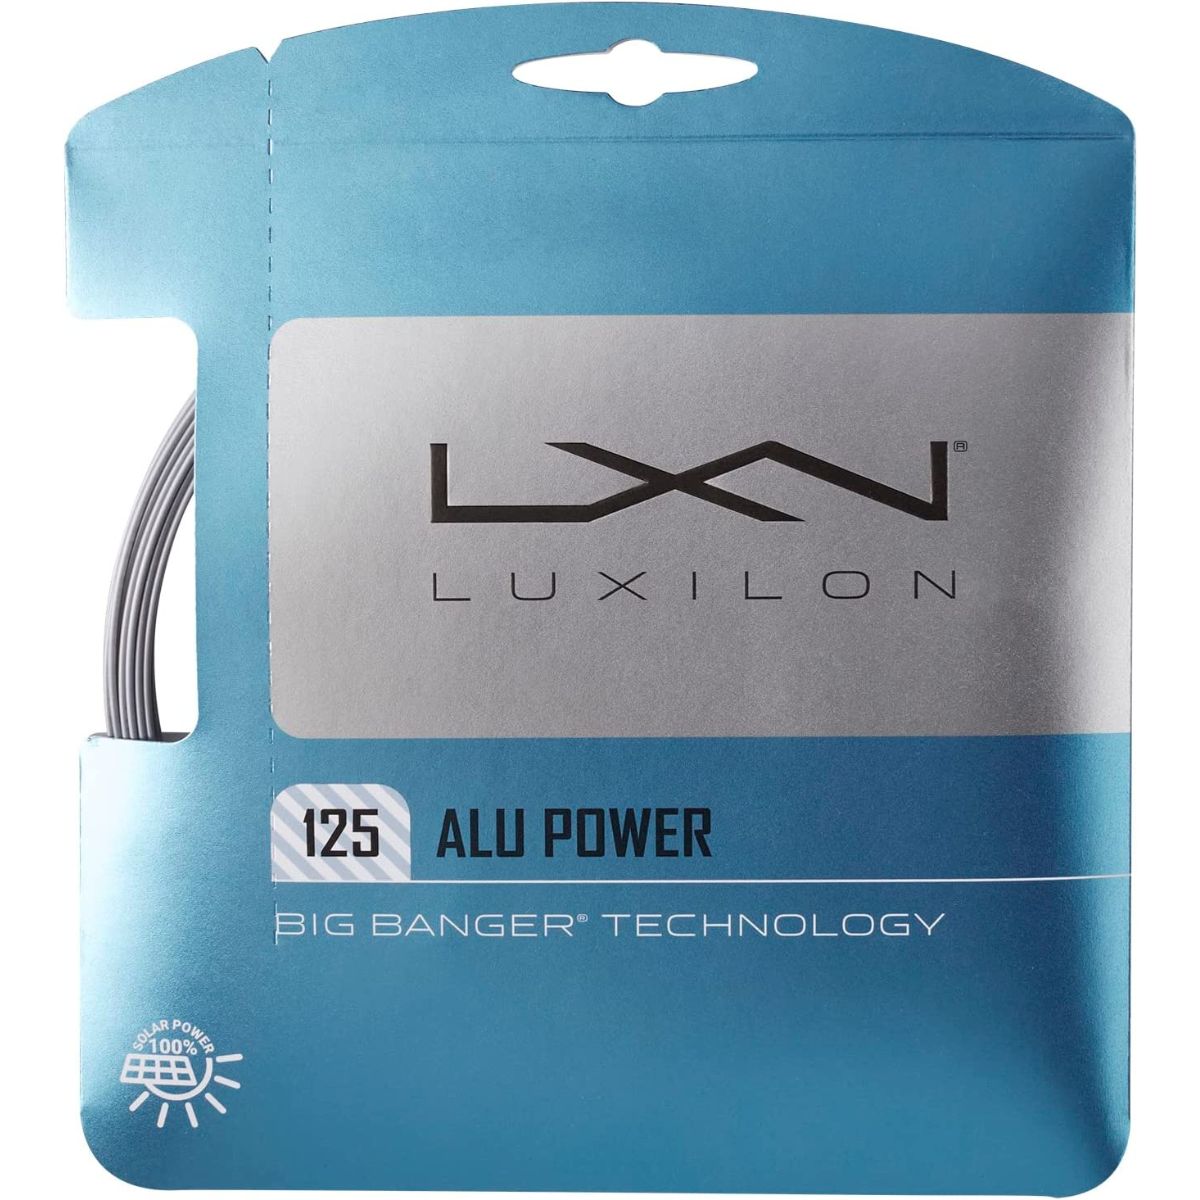 The Best Tennis Strings Options: Luxilon ALU Power